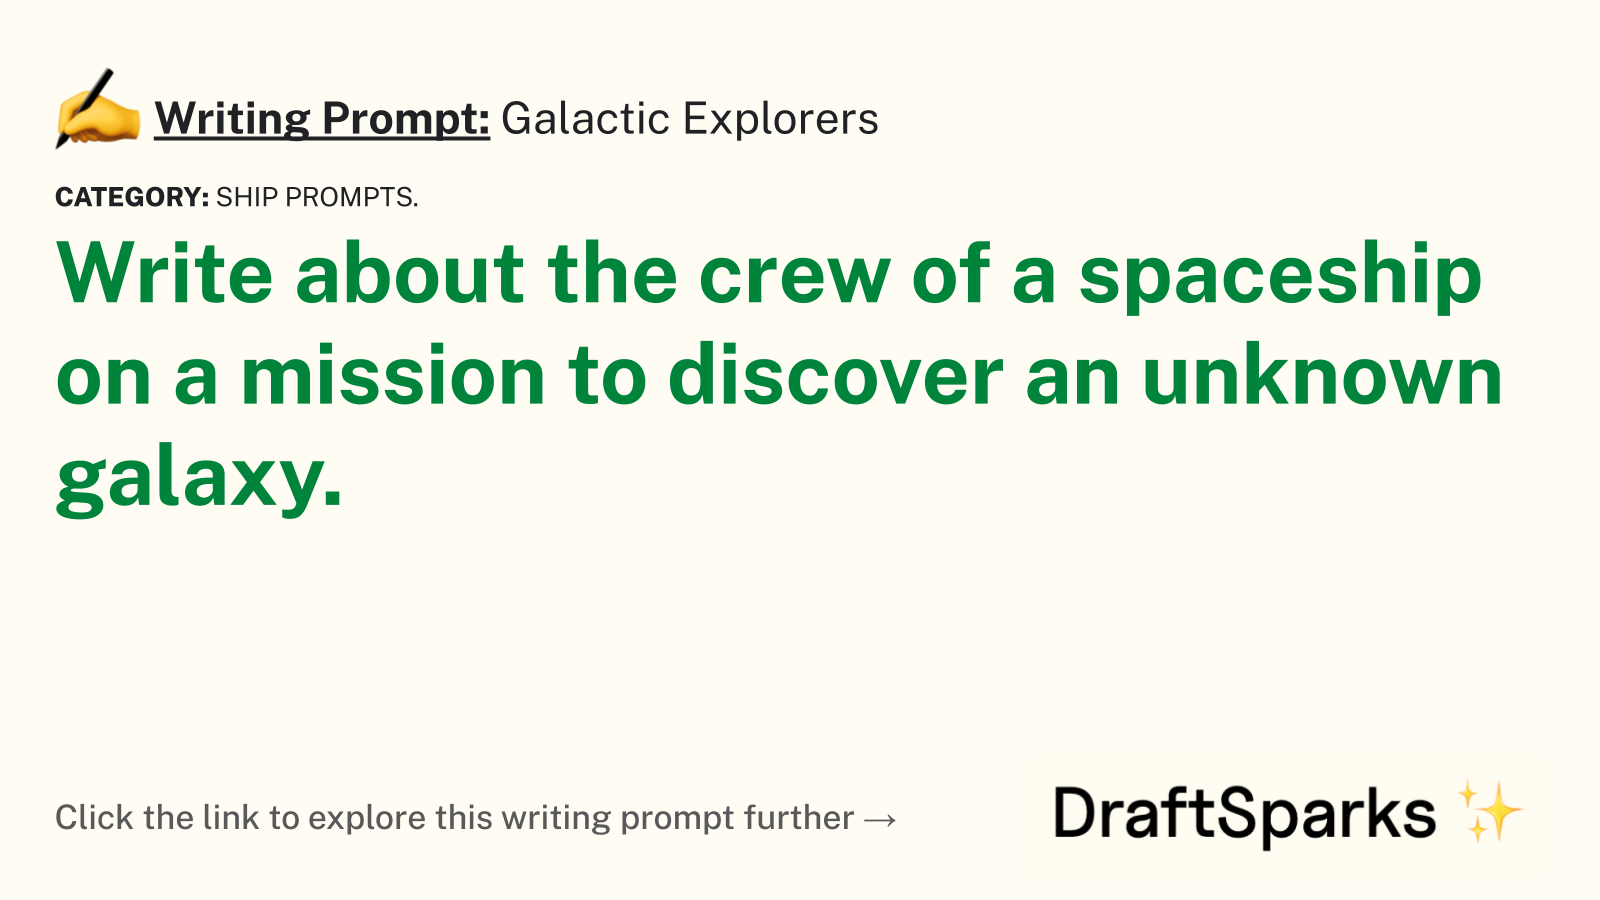 Galactic Explorers